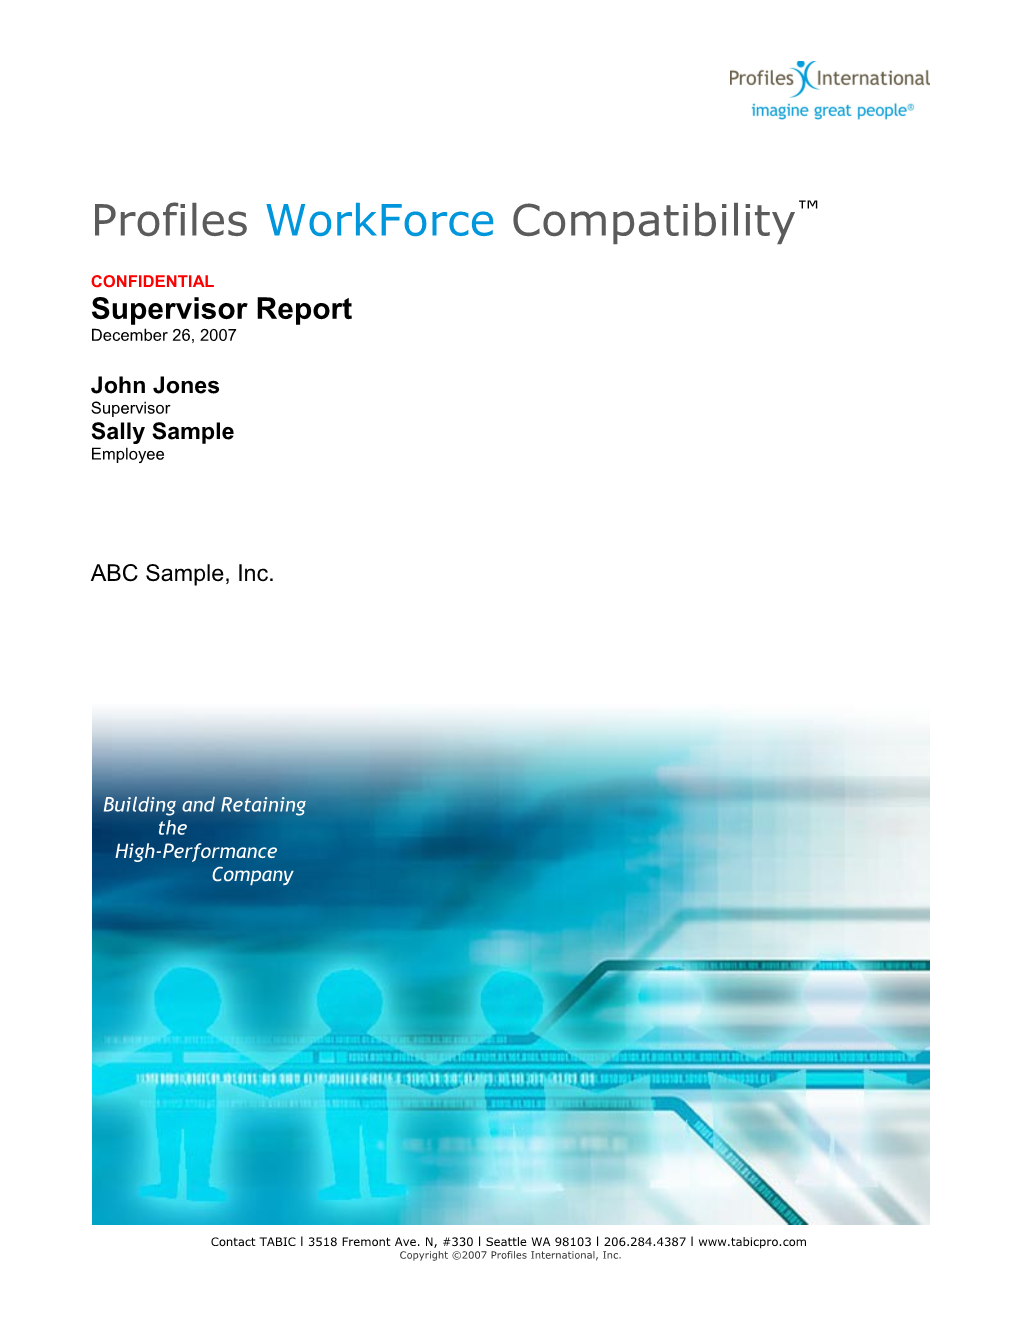 Profiles Workforce Compatibility